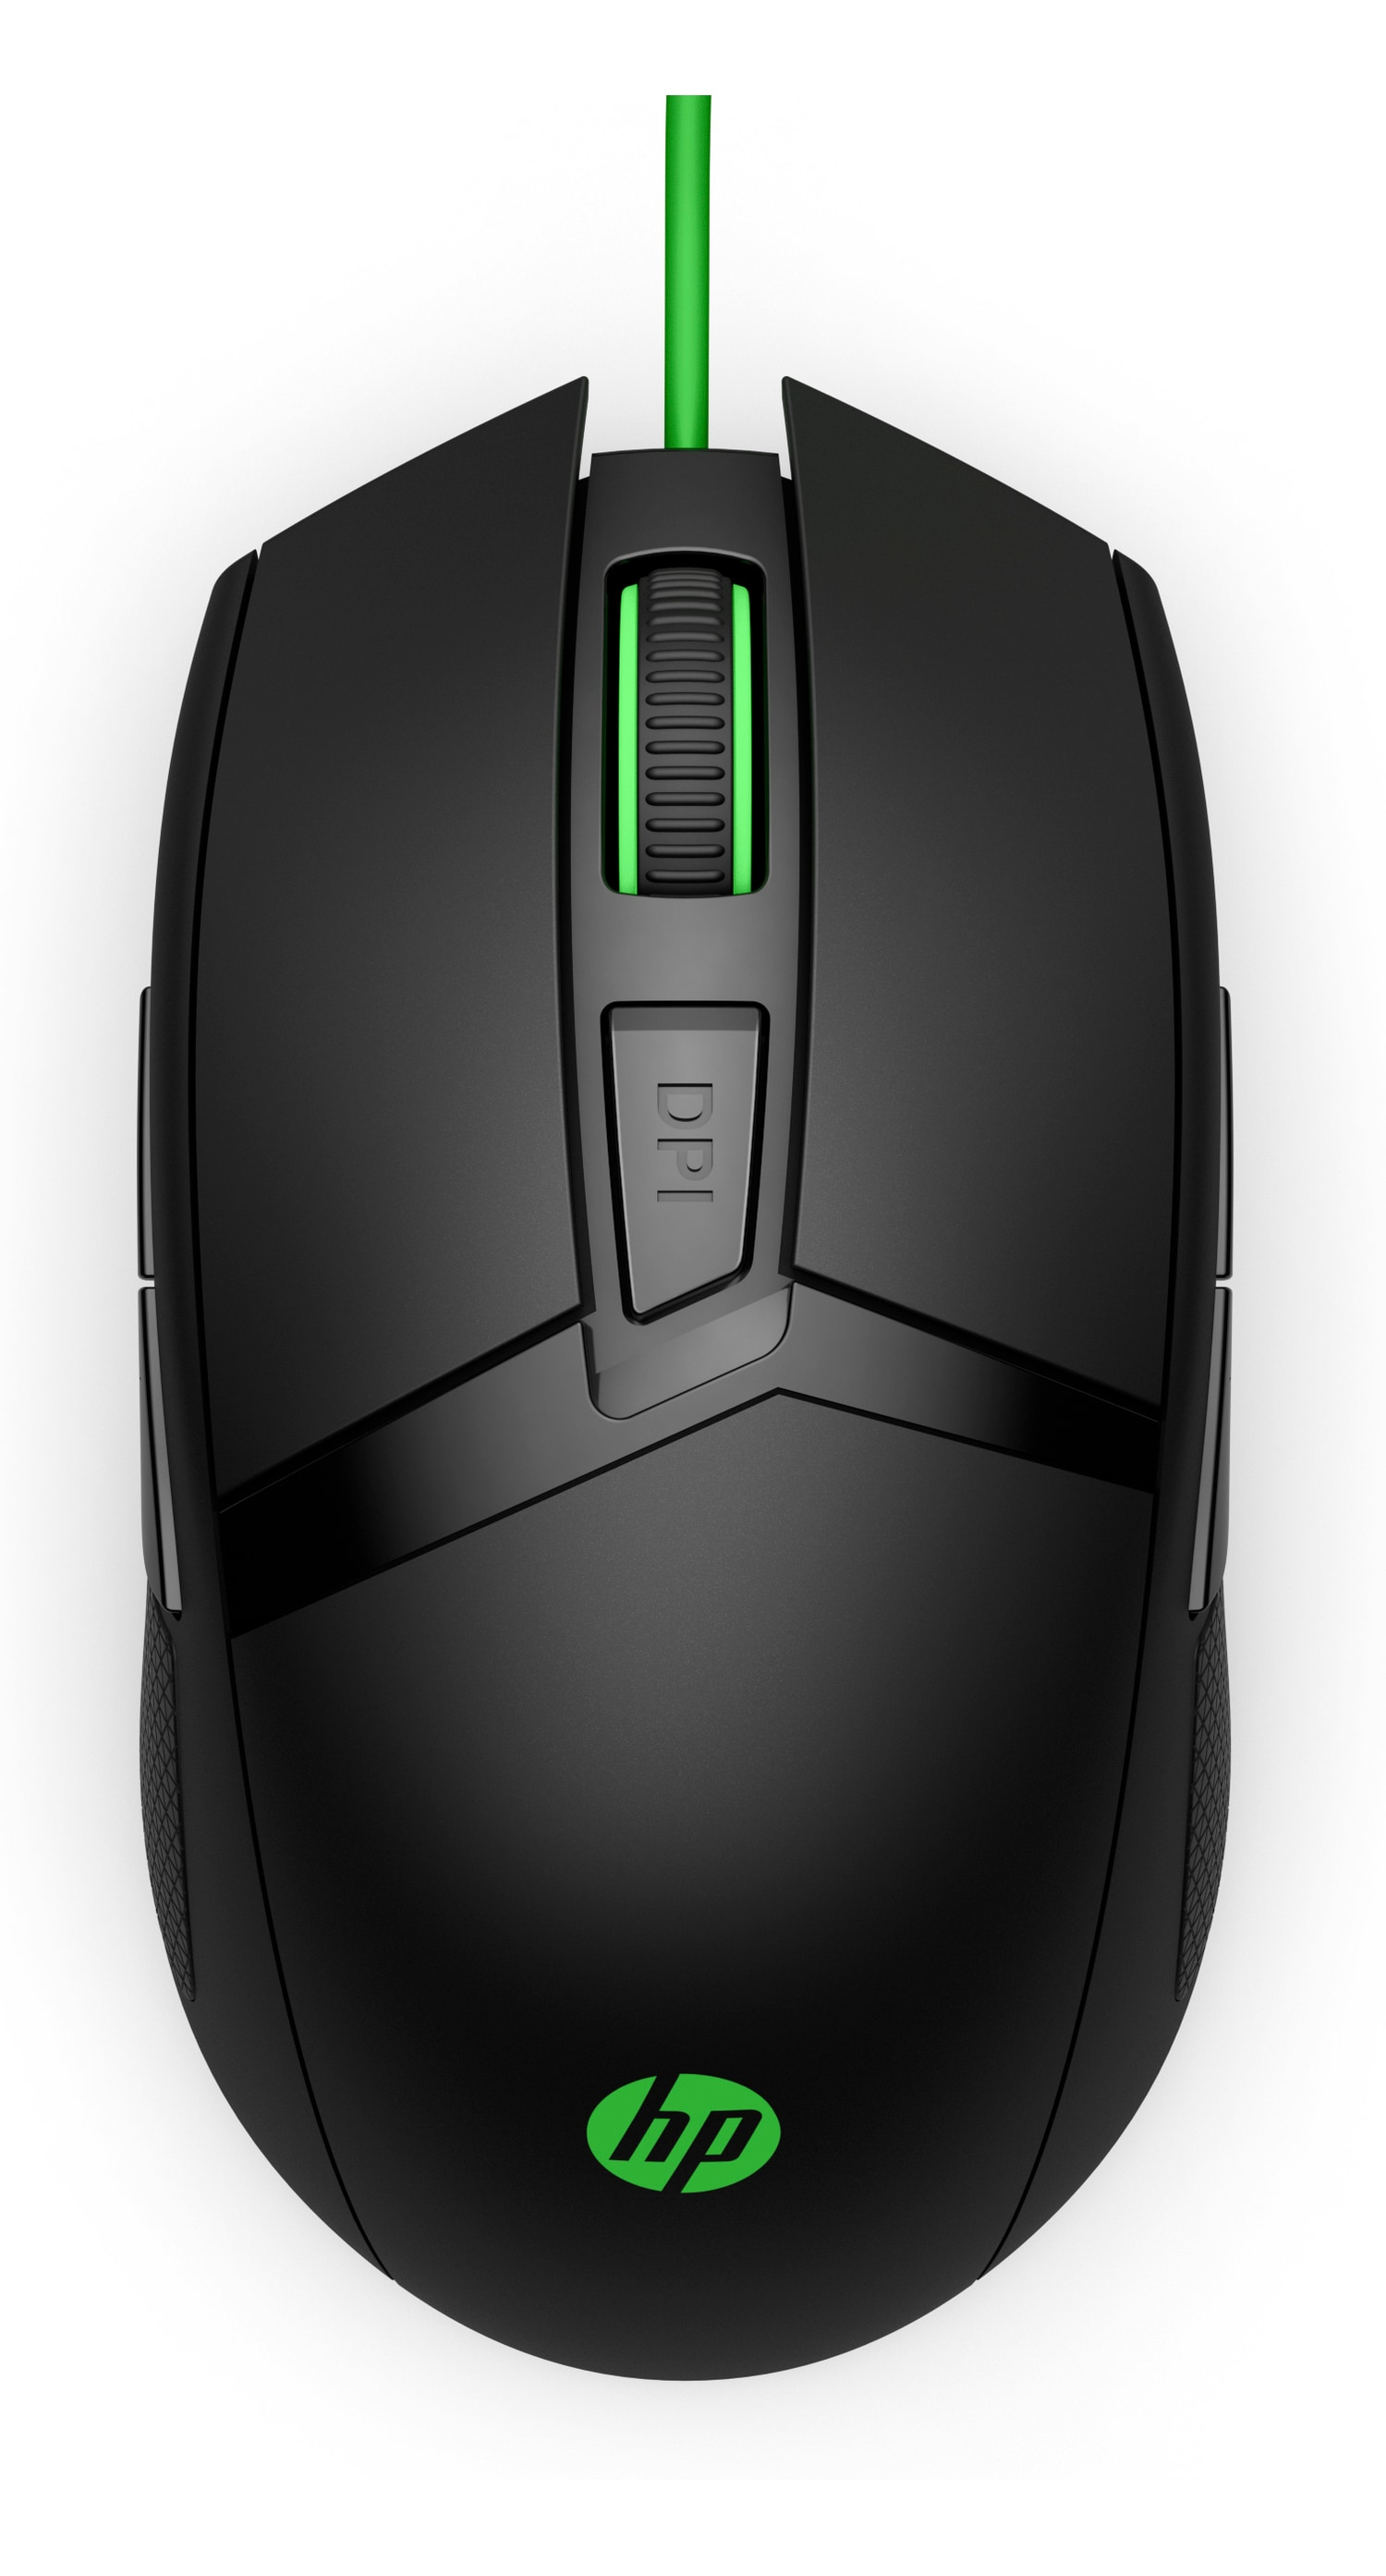 HP Pavilion 300 Black/Green Gaming Mouse